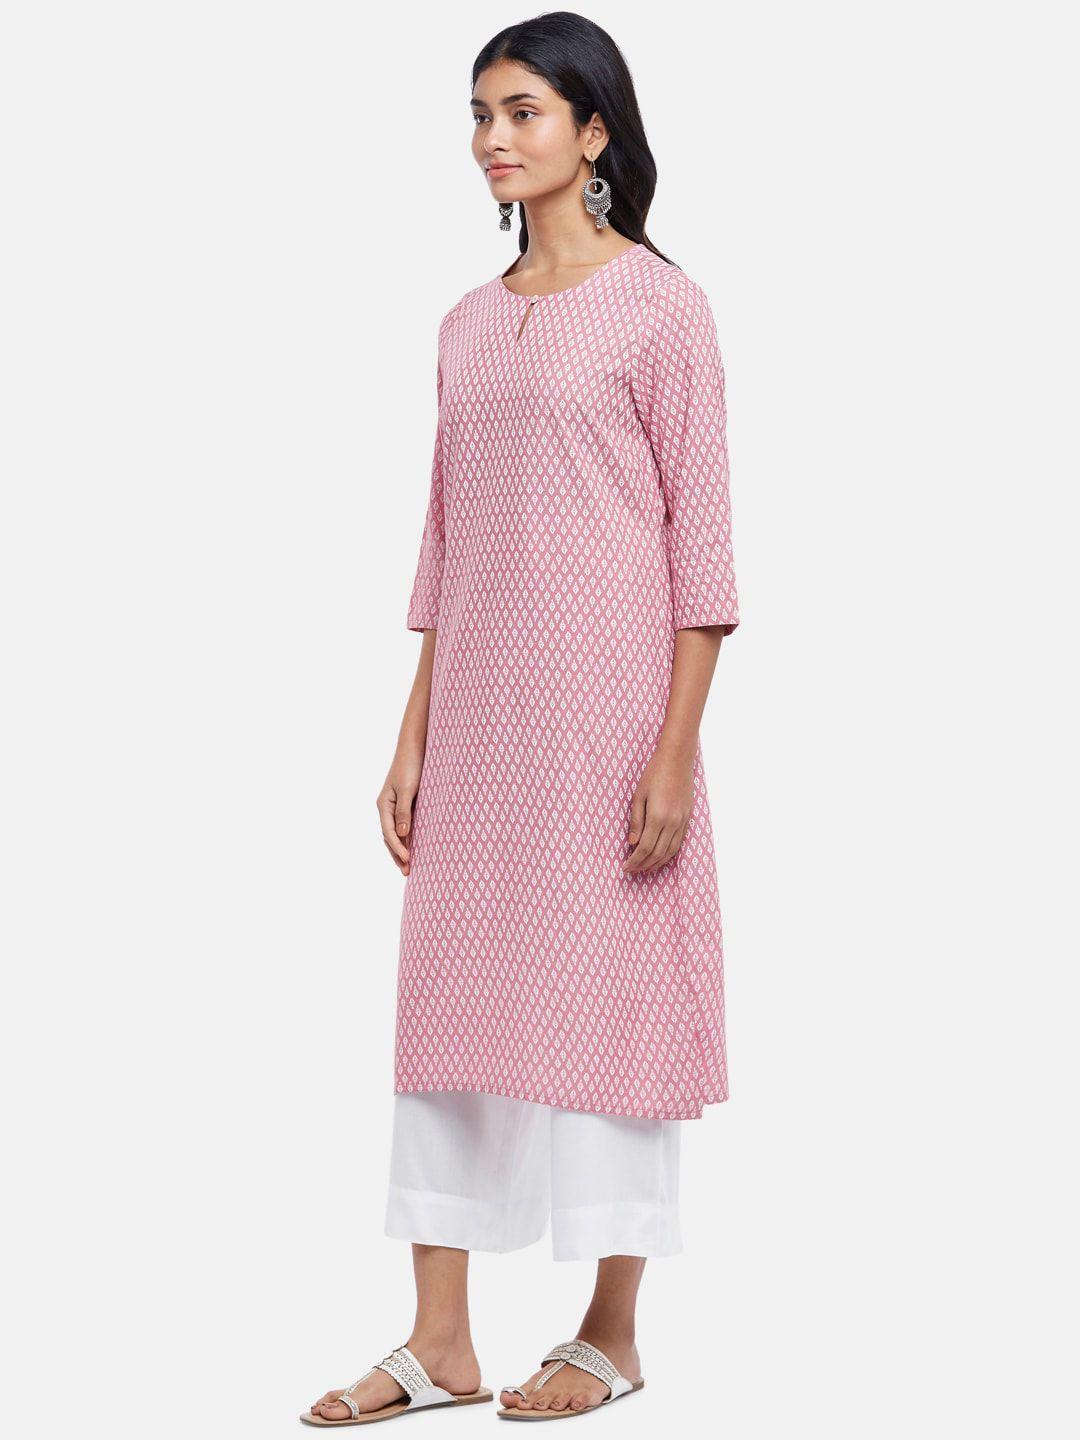 rangmanch by pantaloons women pink ethnic motifs printed kurta with palazzos